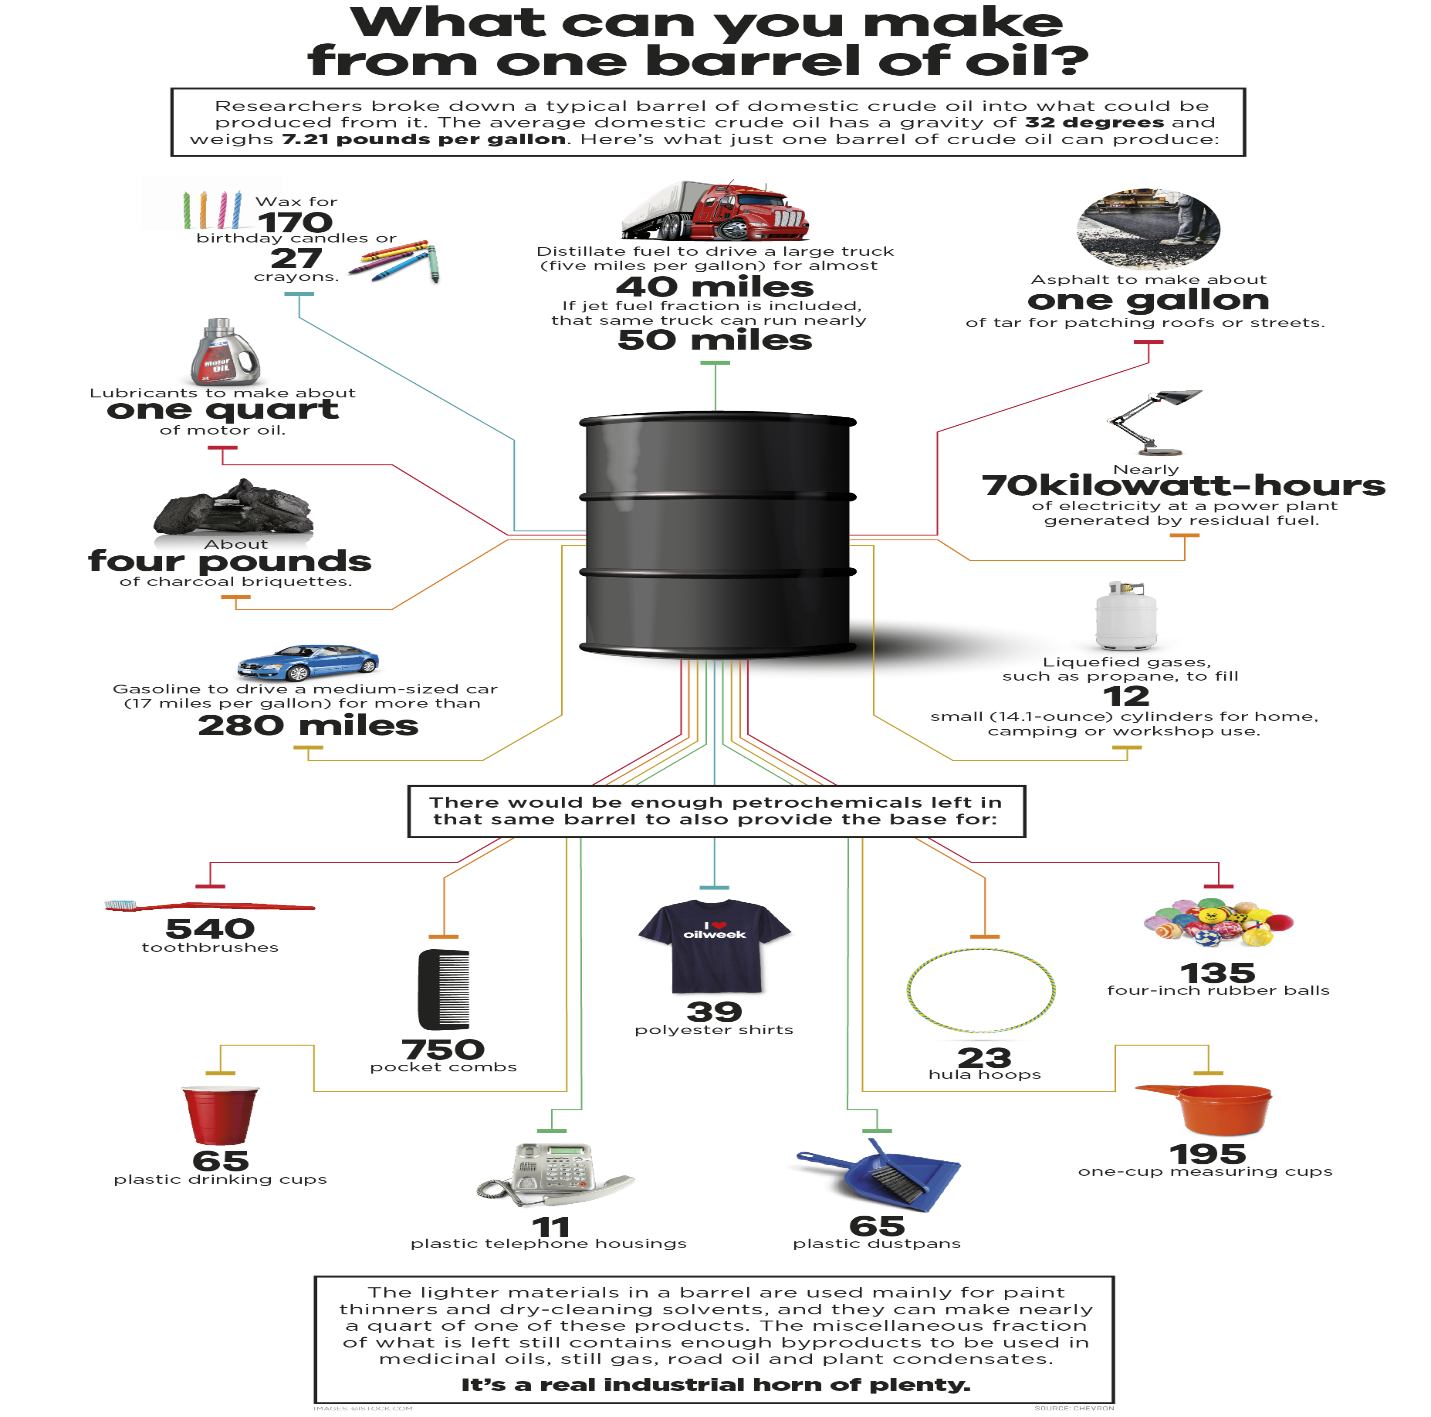 A Barrel of Oil: More Than Just Fuel